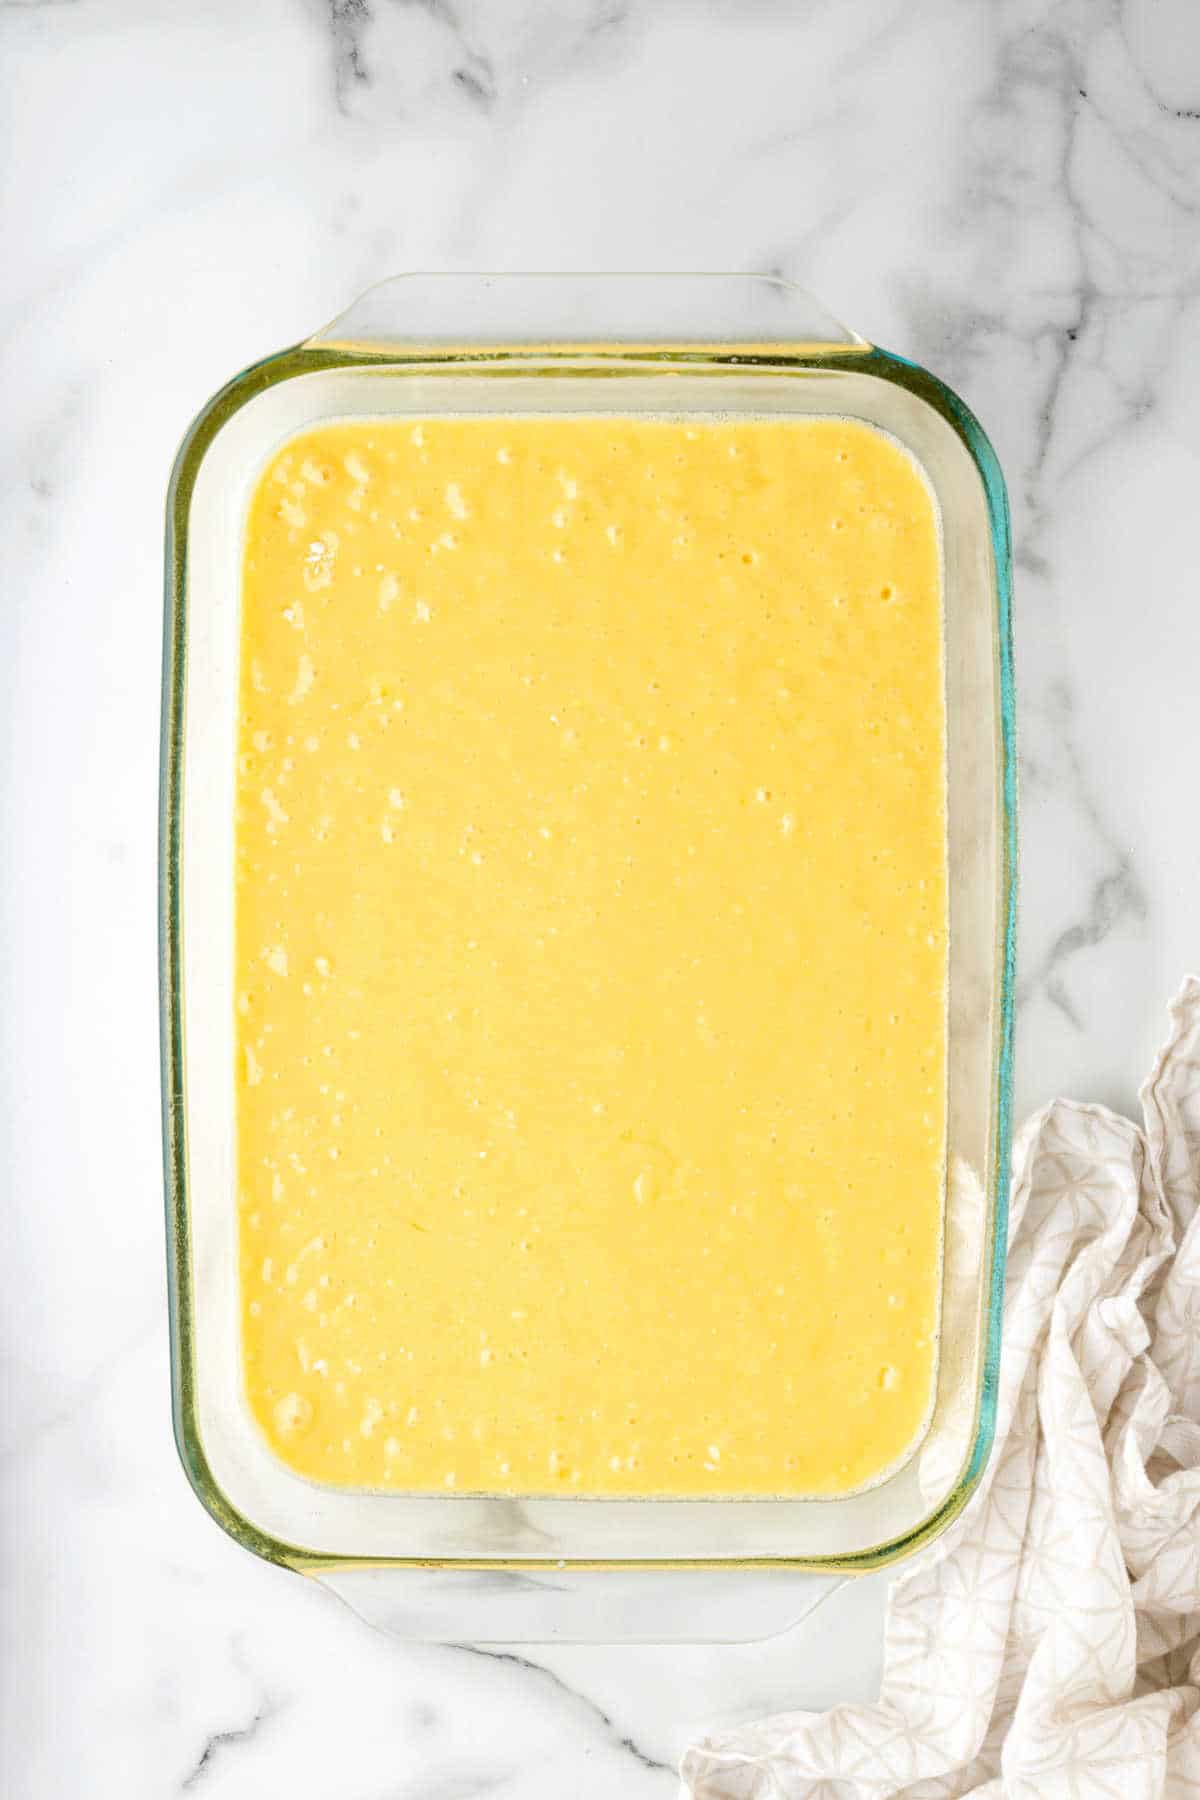 Yellow cake batter in a glass baking pan. 